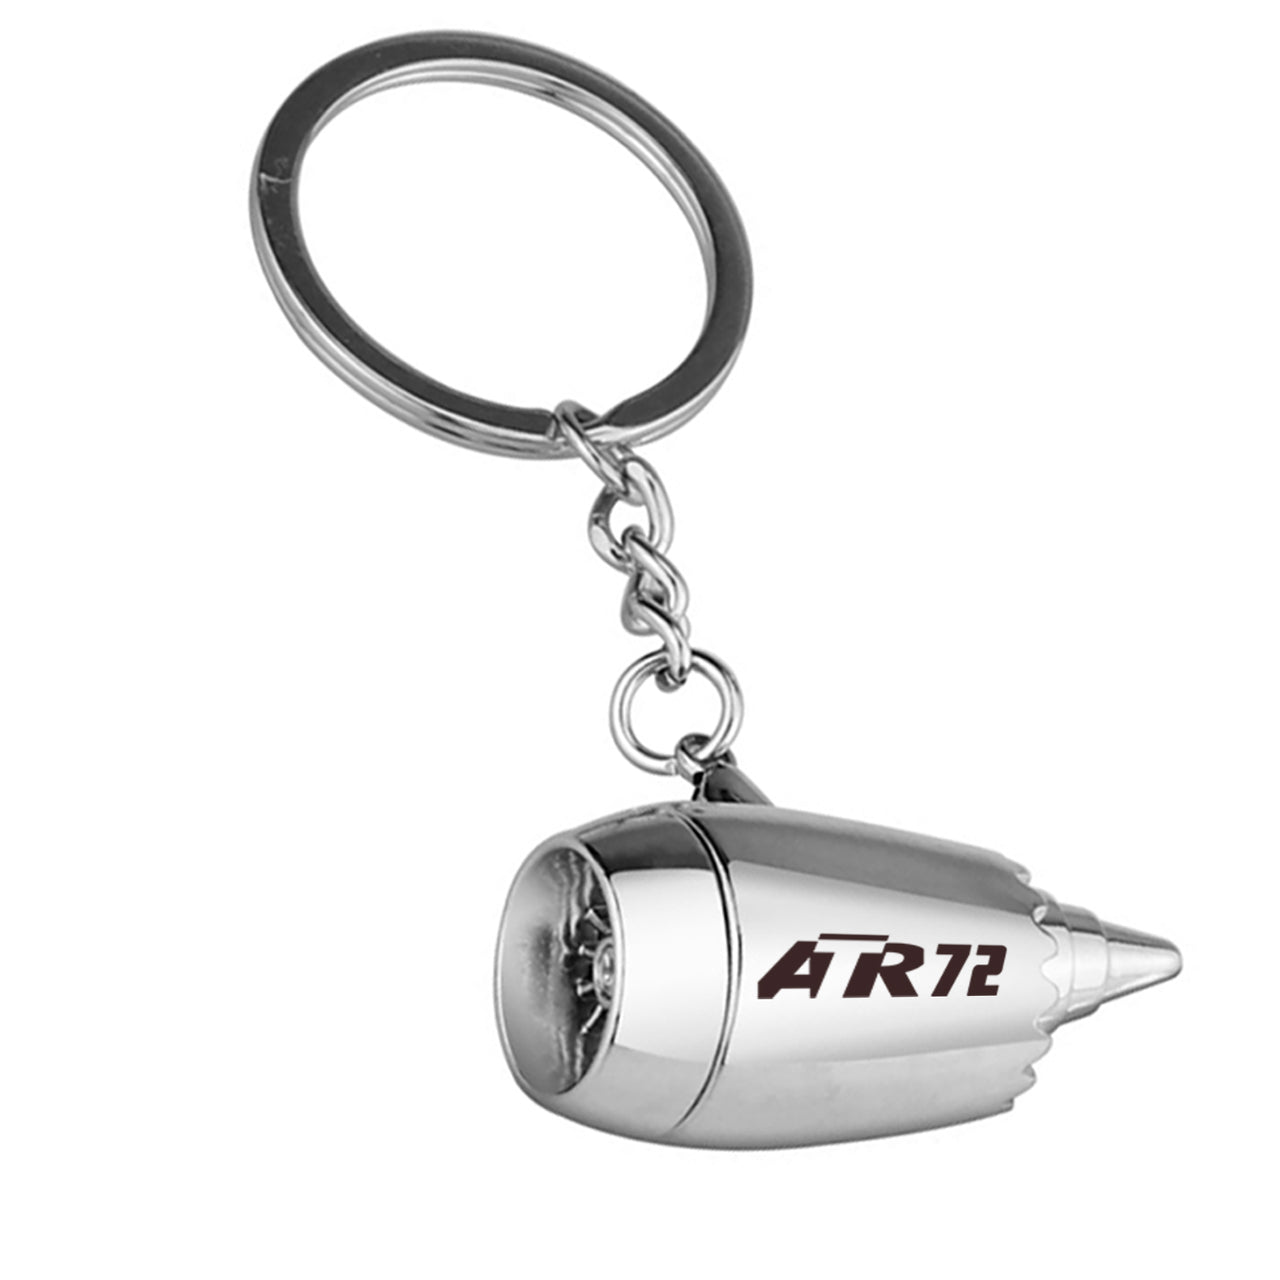 The ATR72 Designed Airplane Jet Engine Shaped Key Chain